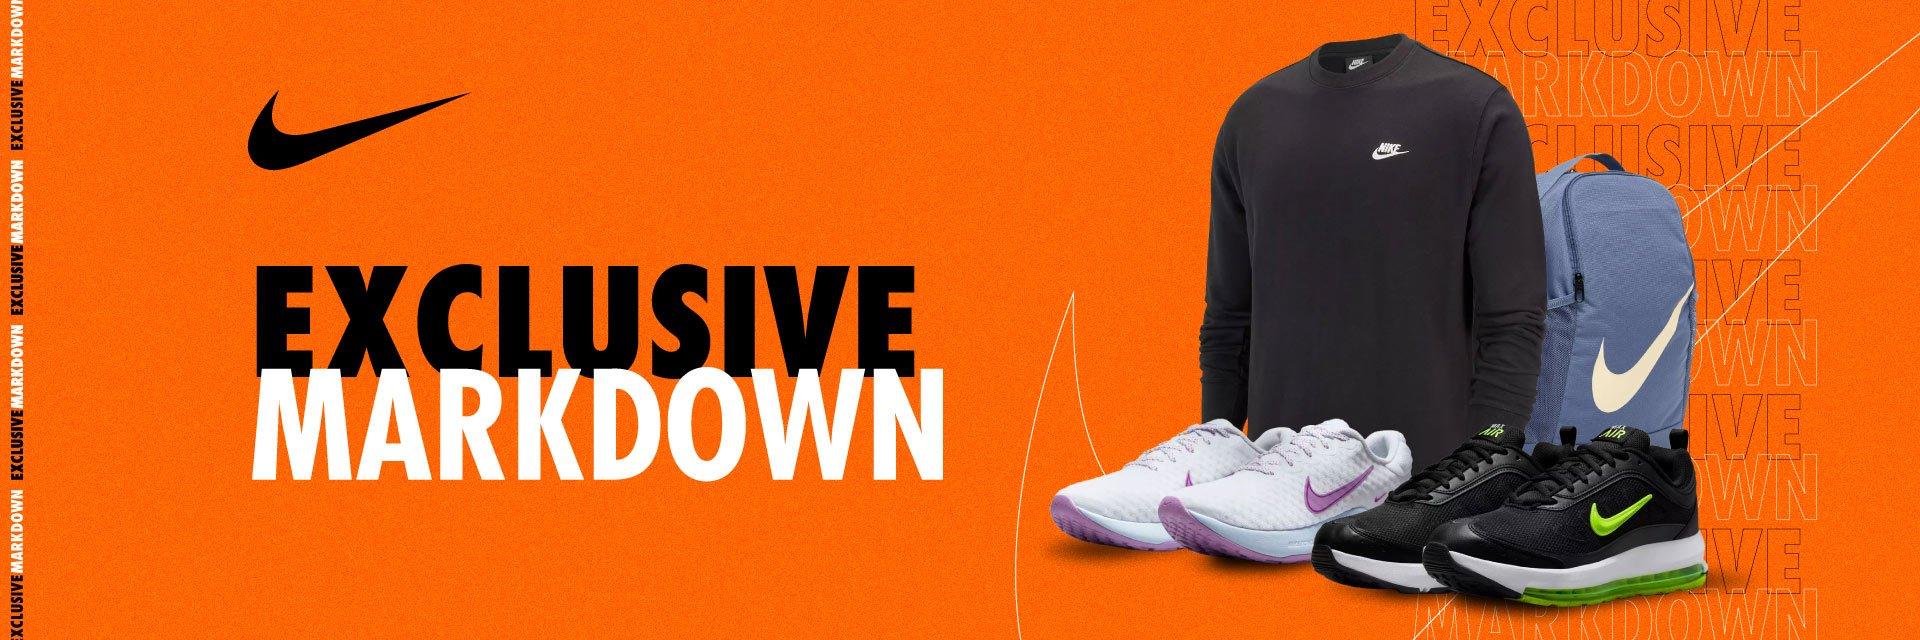 Nike Exclusive Markdown